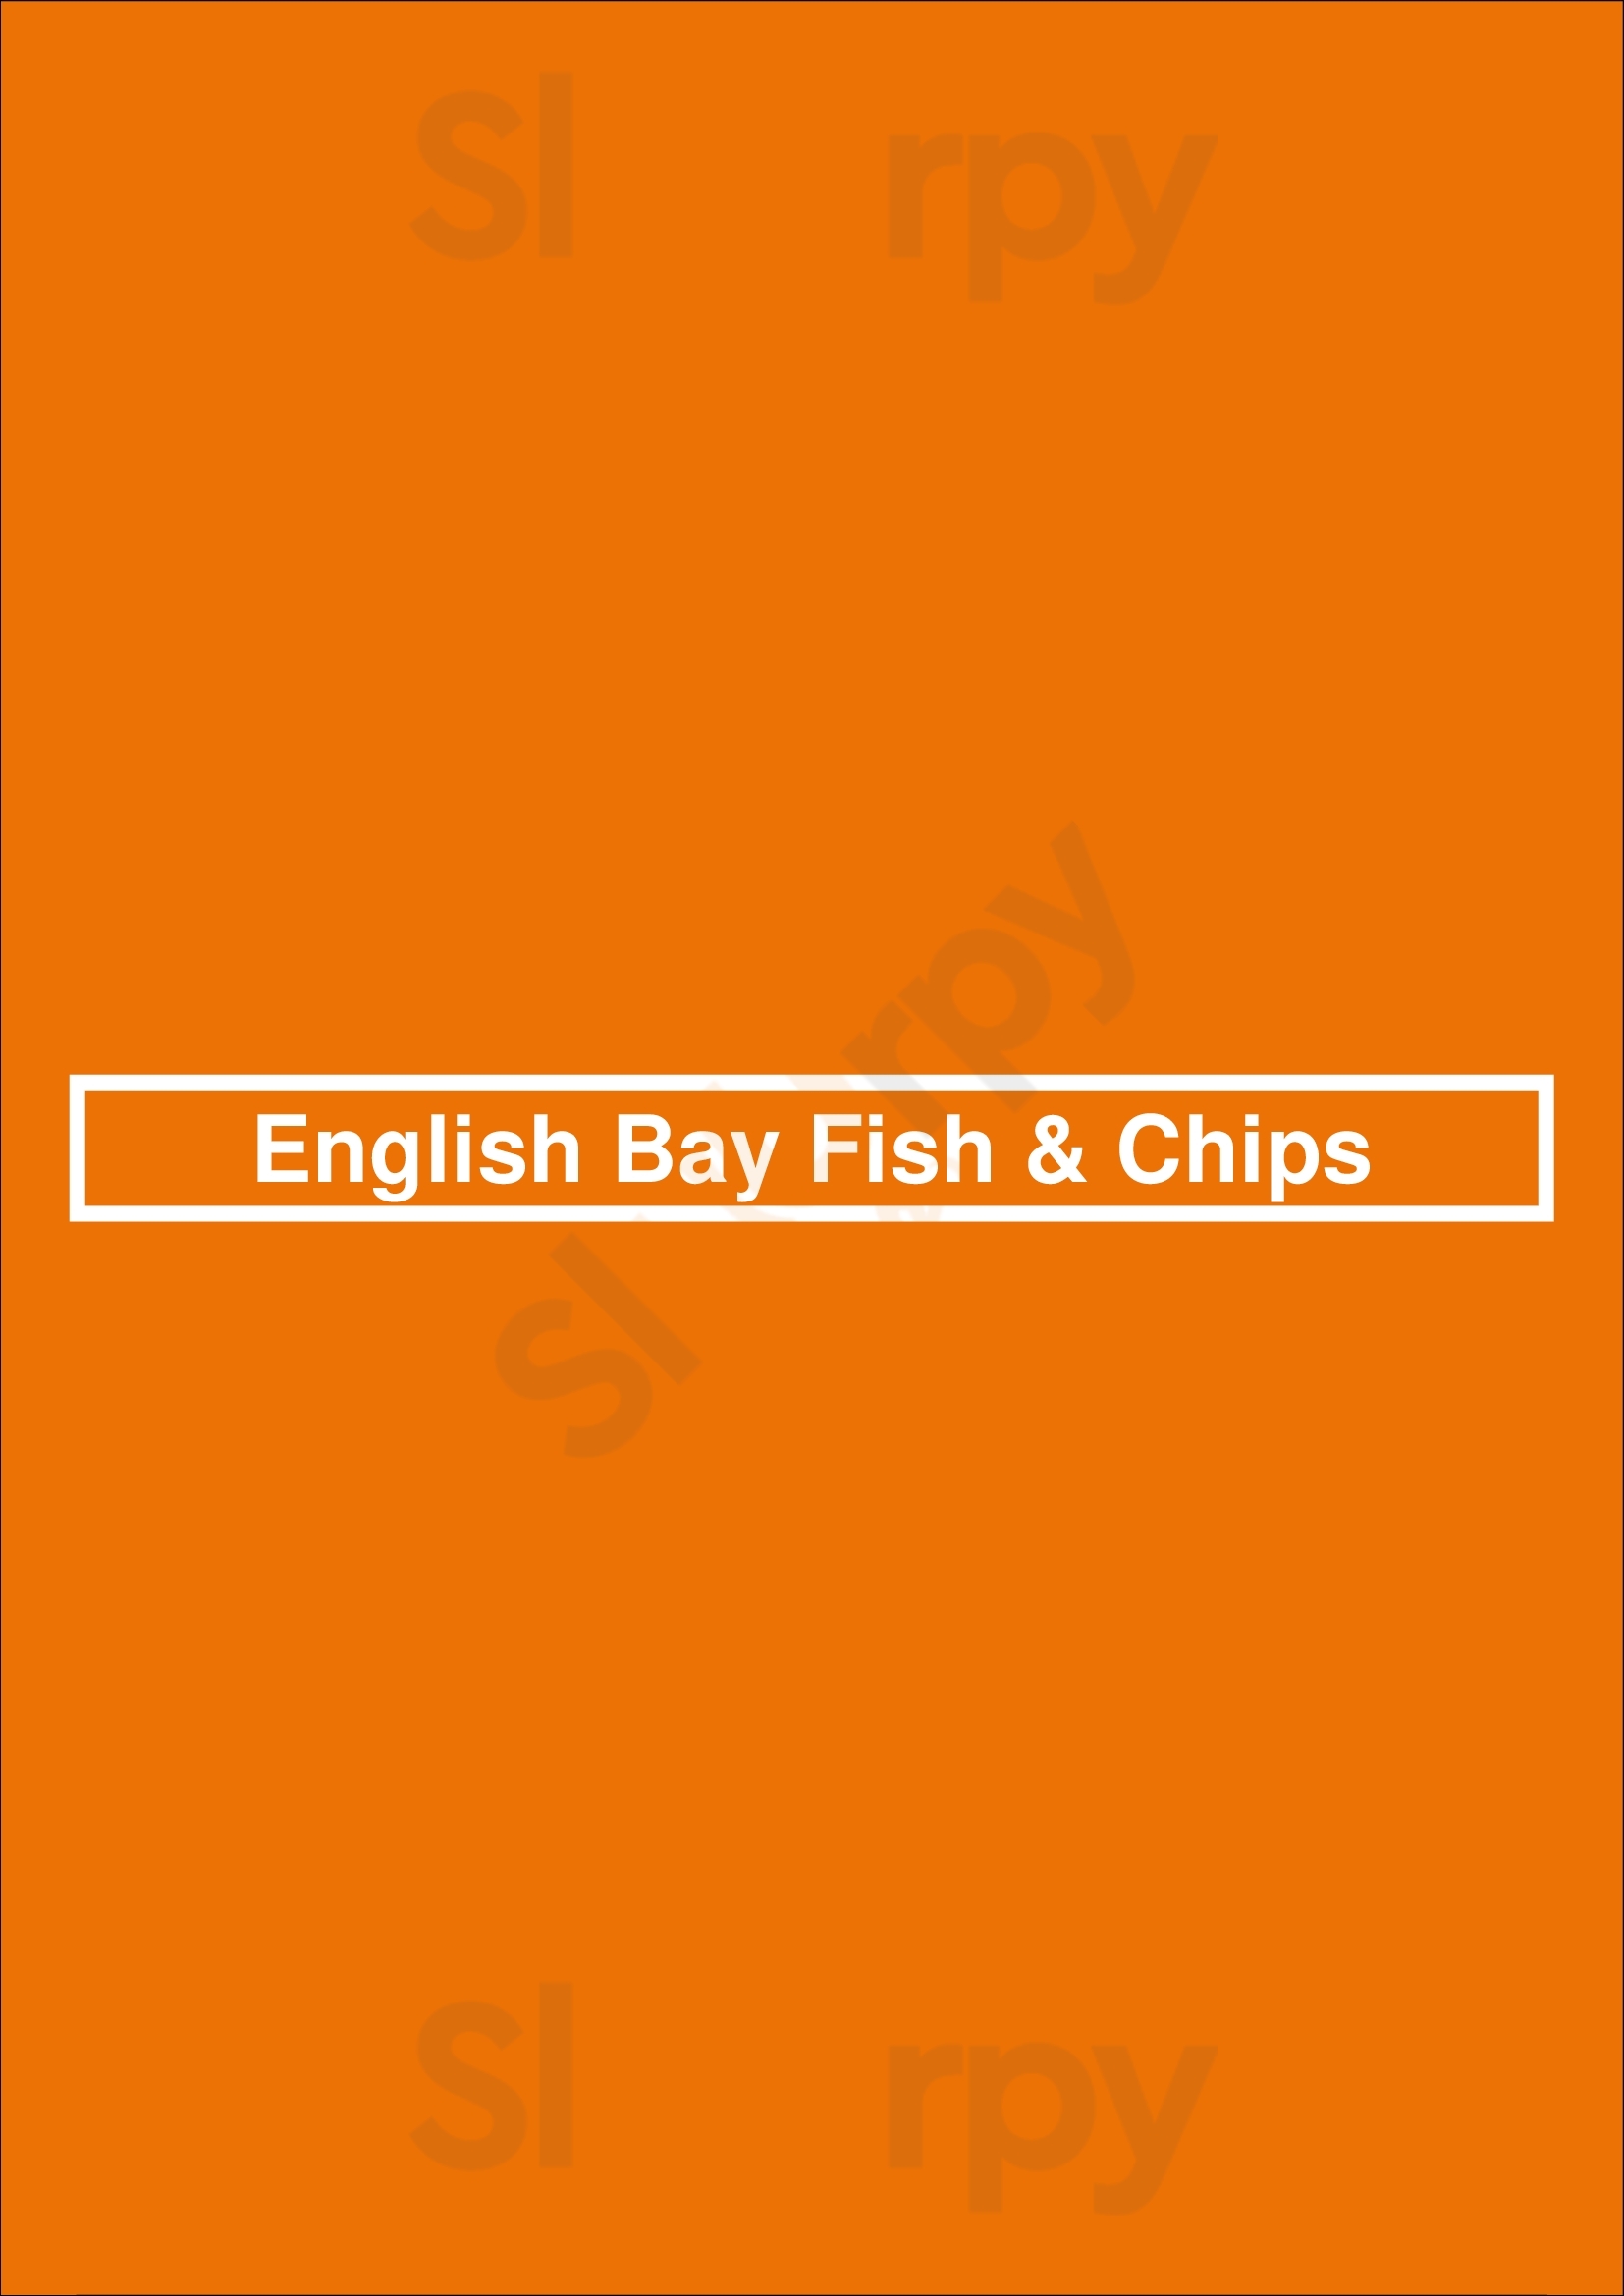 English Bay Fish & Chips Oakville Menu - 1